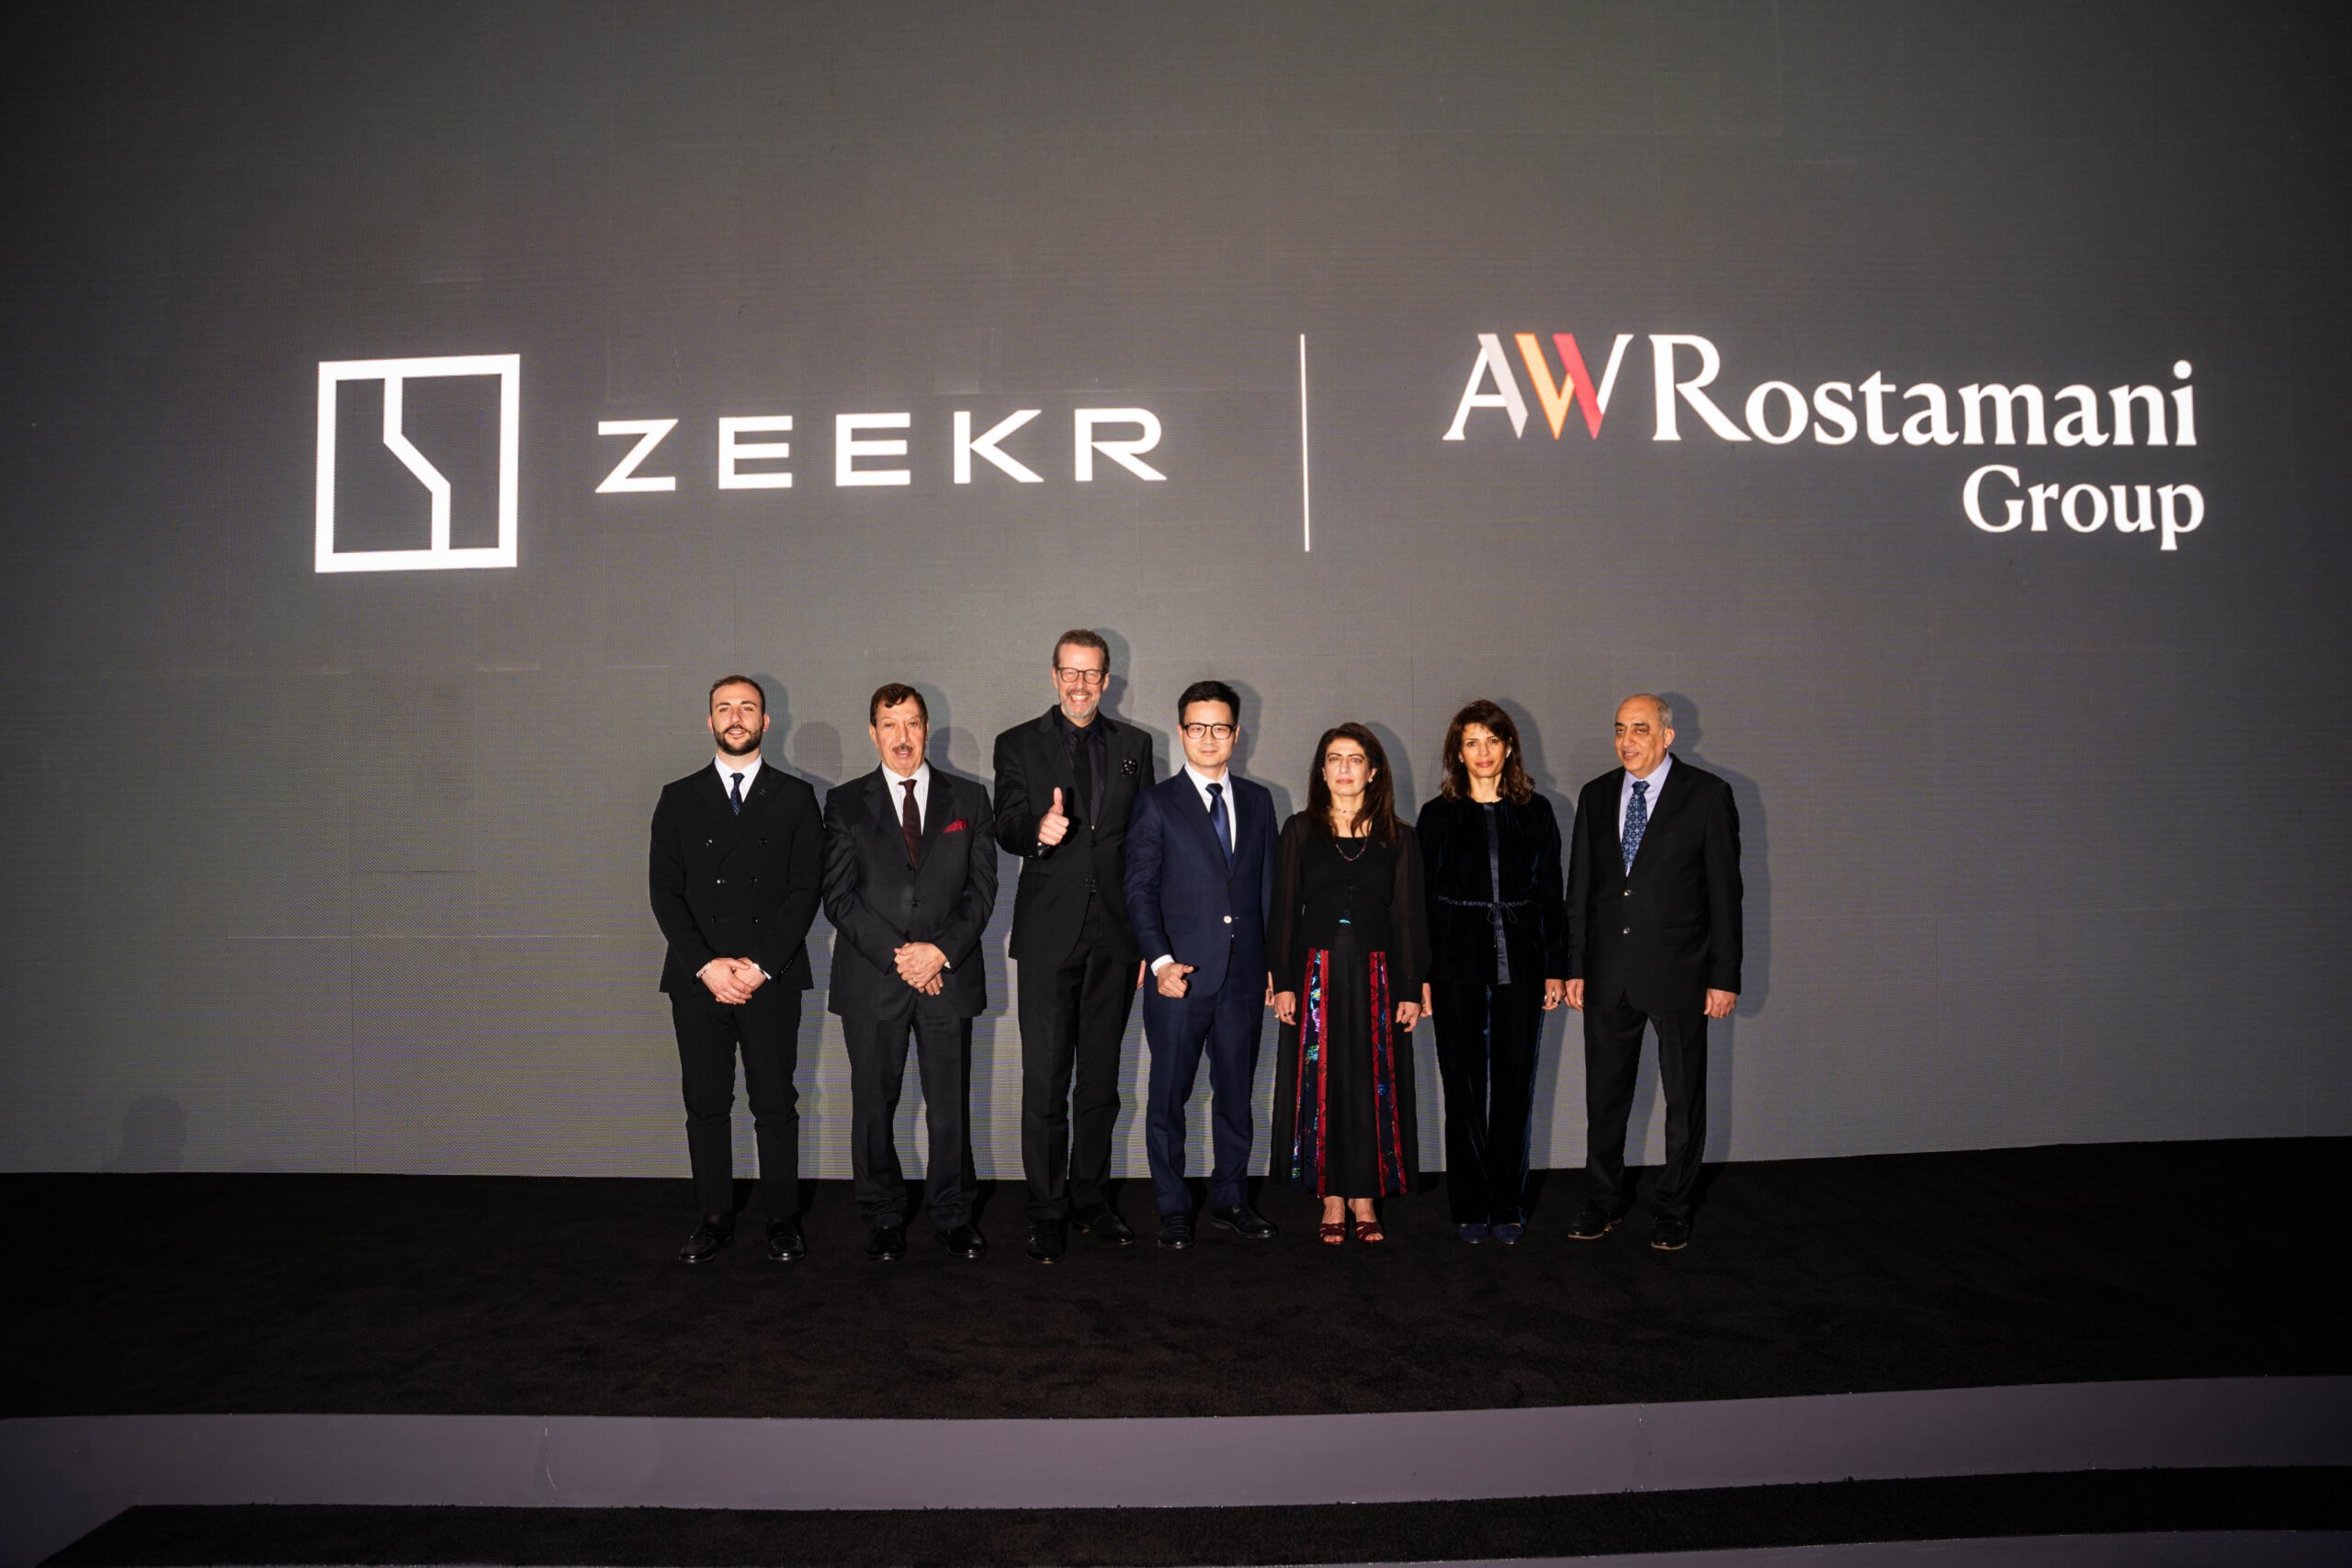 Zeekr Enters UAE Market: AW Rostamani Group Unveils Premium EV Lineup